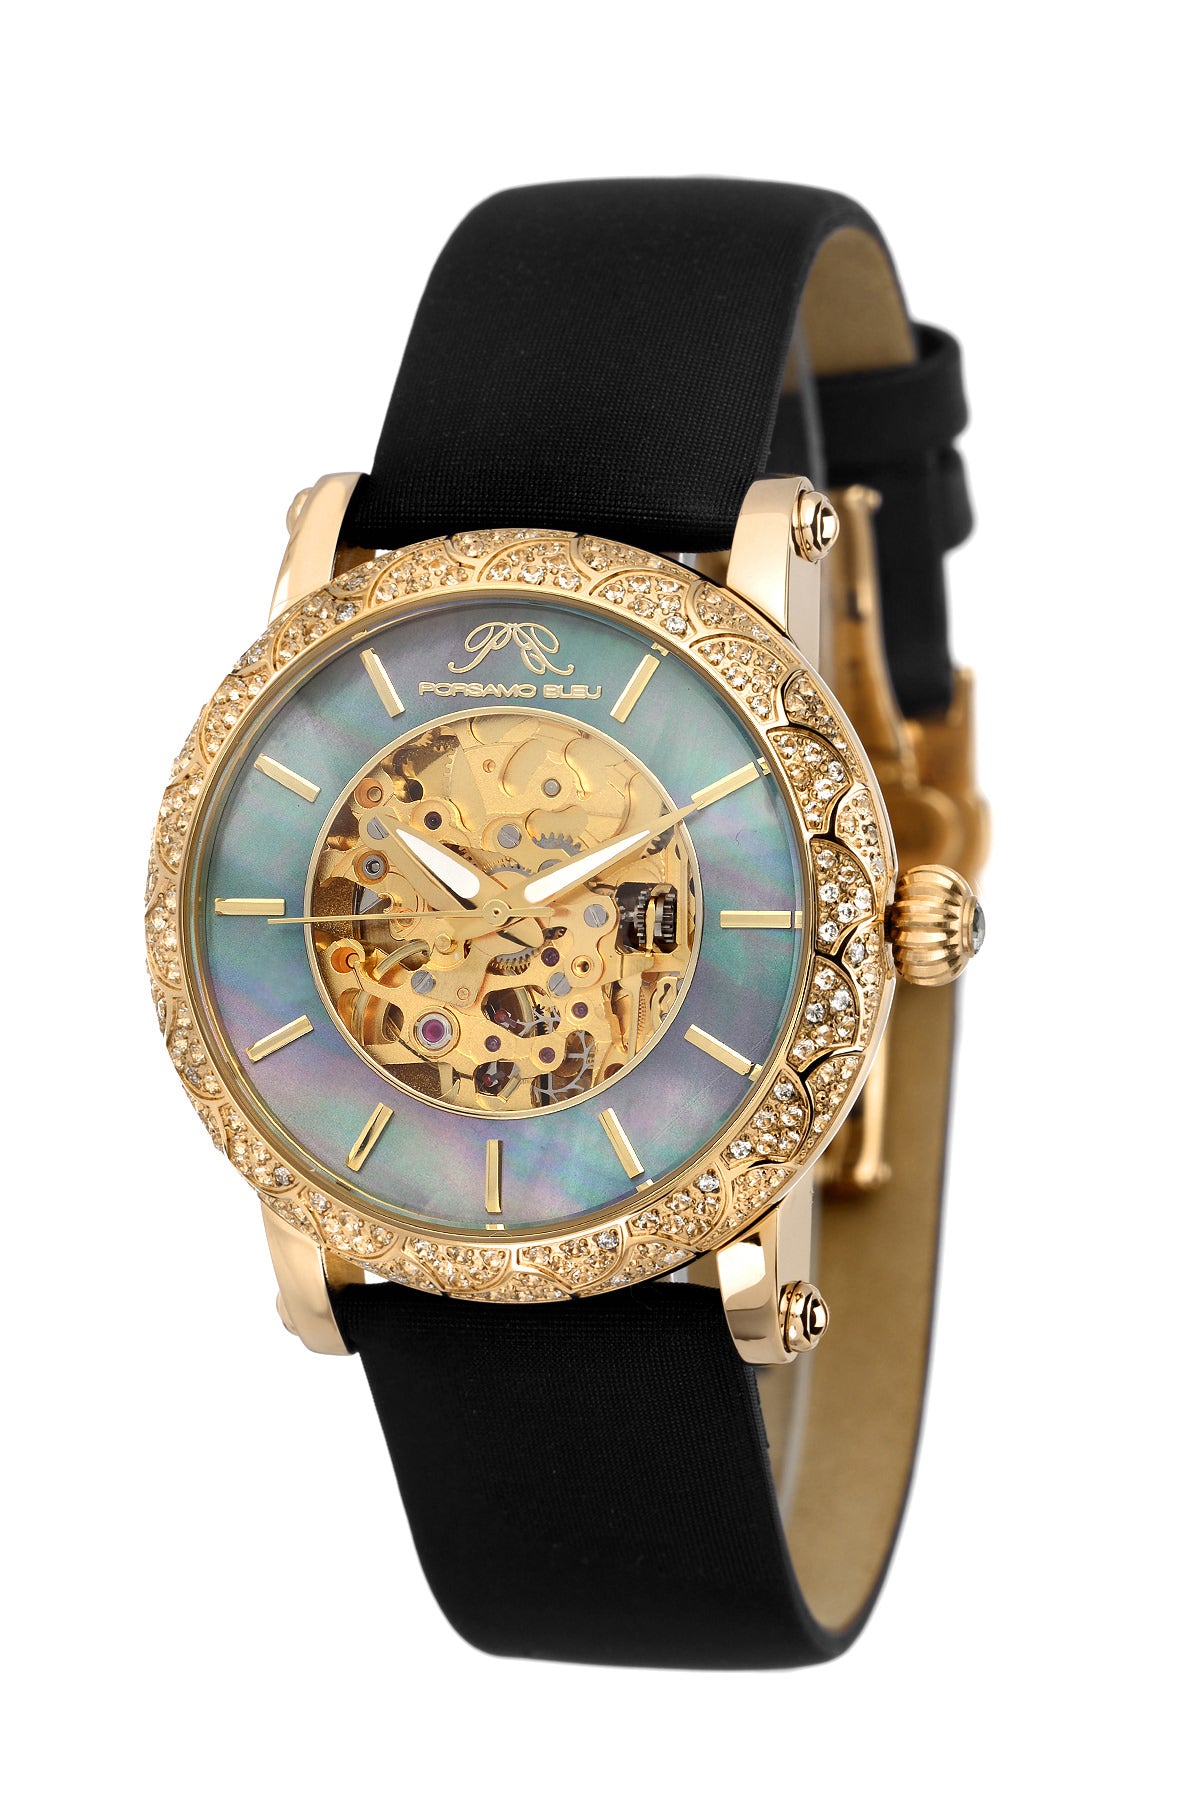 Porsamo Bleu Liza Luxury Automatic Topaz Women's Satin Leather Watch, Gold, Blue, Black 692BLIL